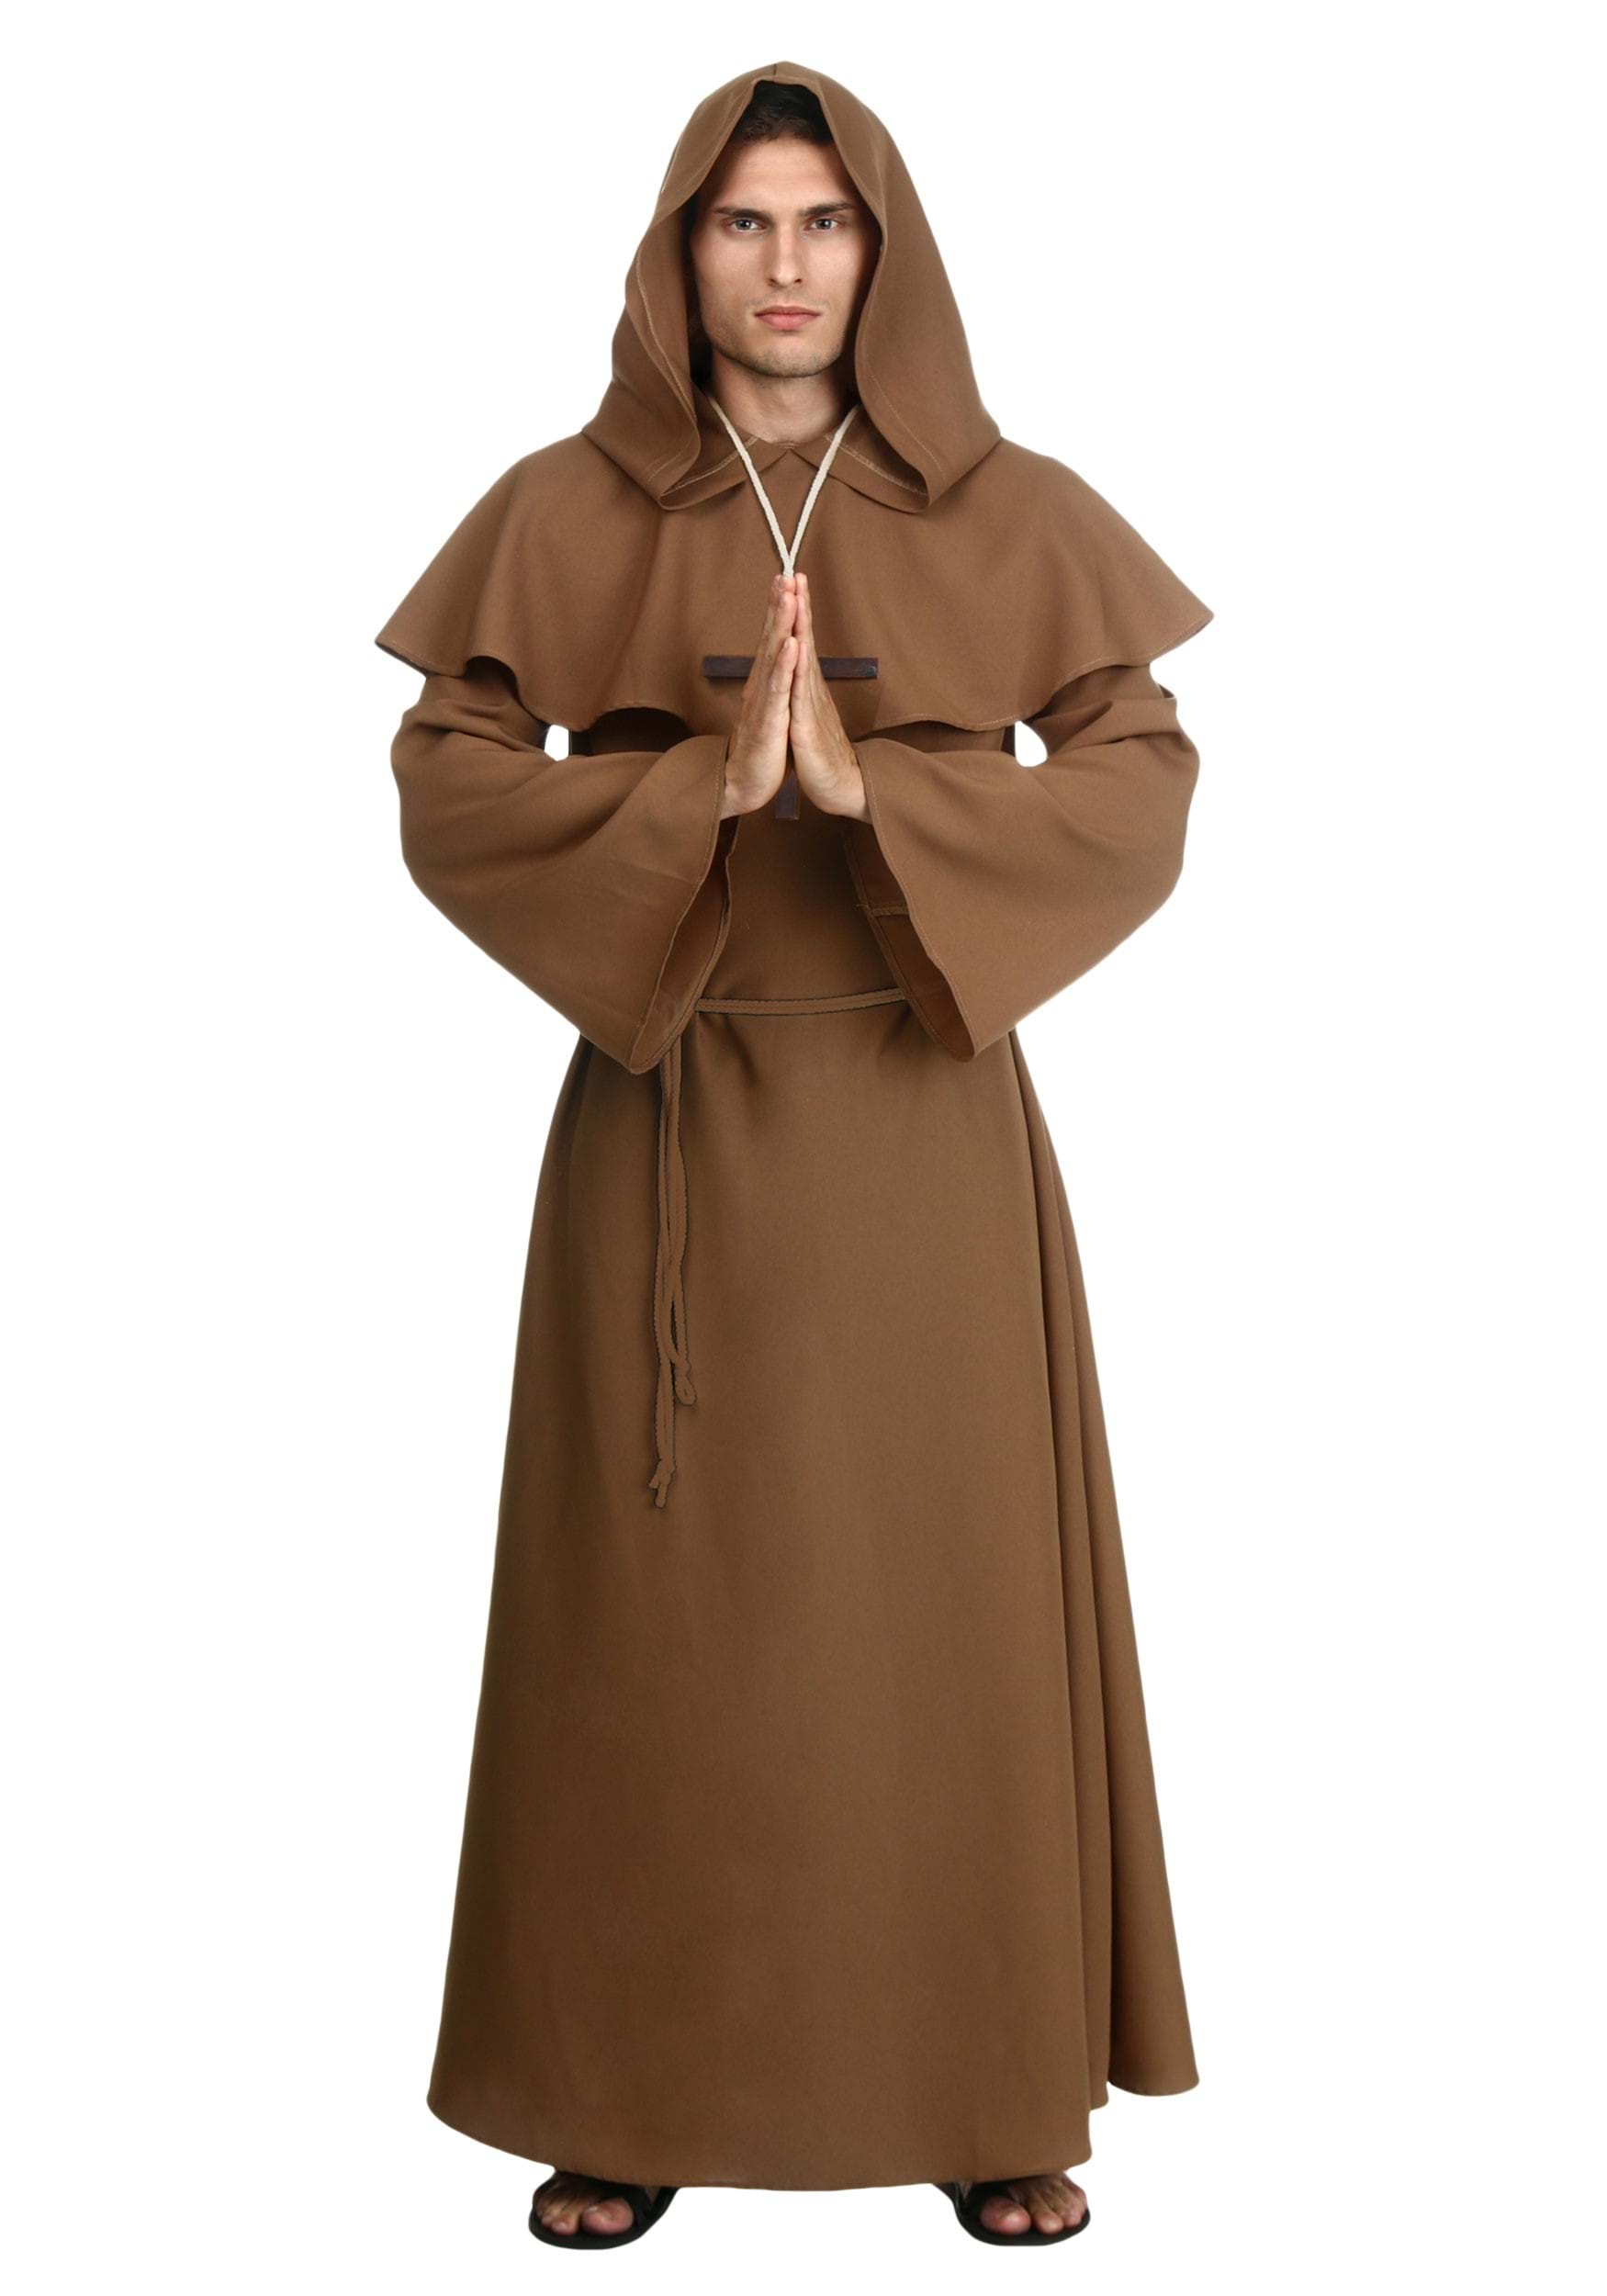 Brown Monk Robe Costume for Men